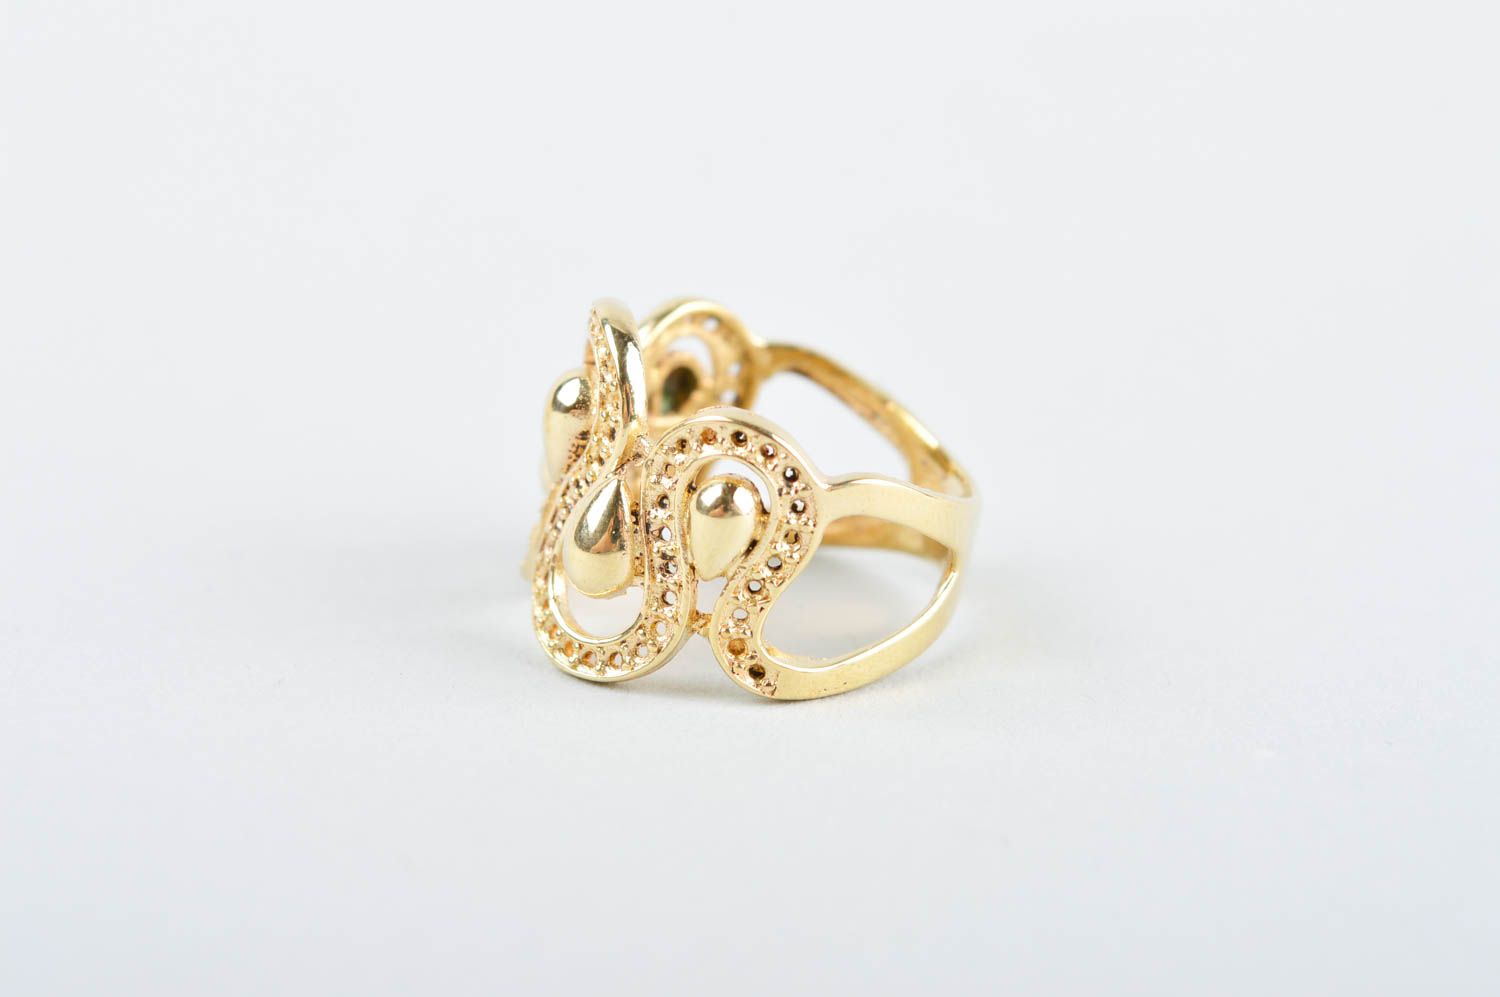 Stylish handmade metal ring brass ring design handmade accessories small gifts photo 5